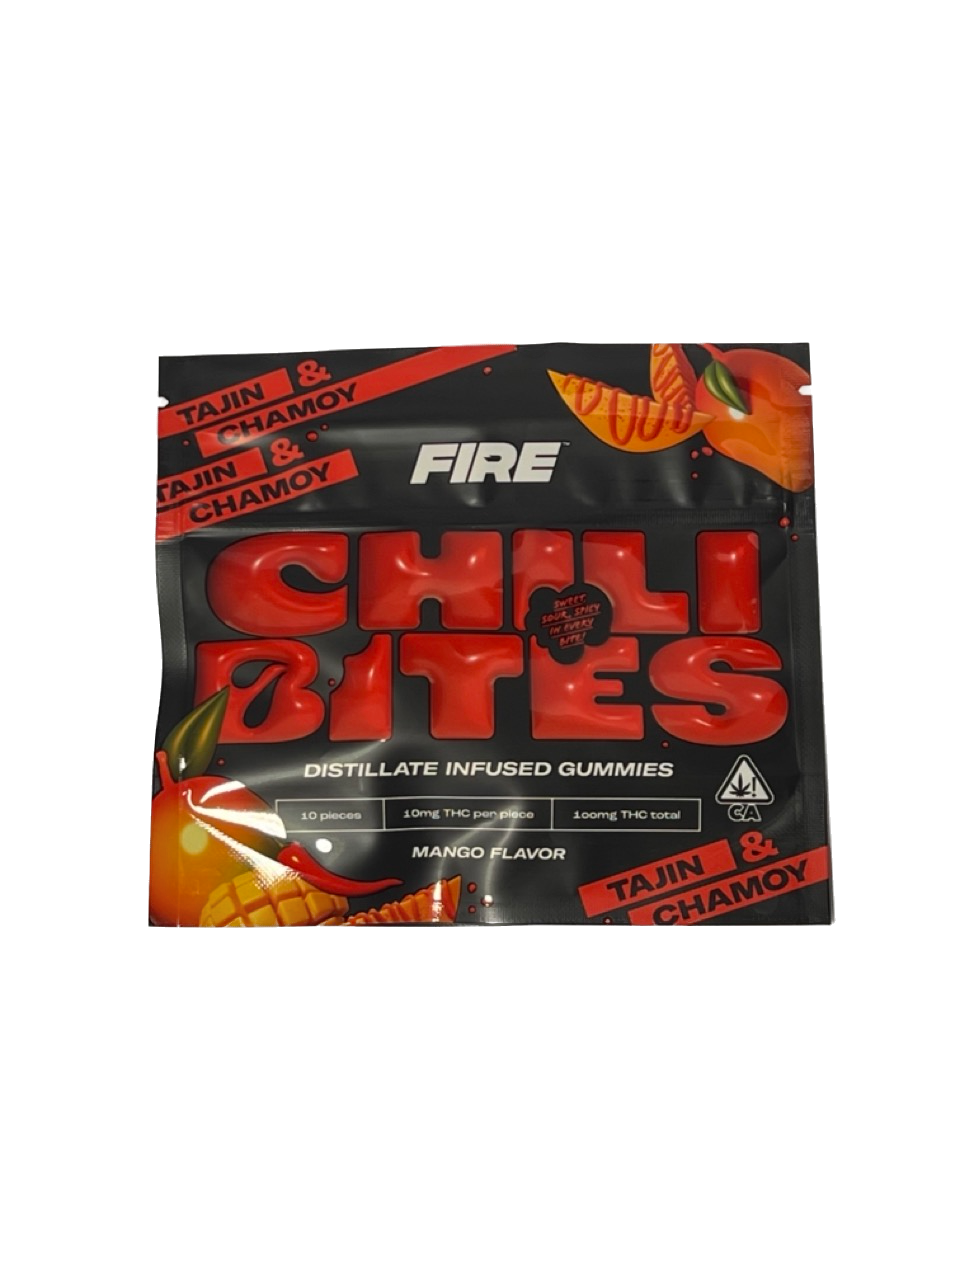 Fire Chili Bites Gummy Edibles - 100mg - Tajin & Chamoy - Mango - The Balloon Room